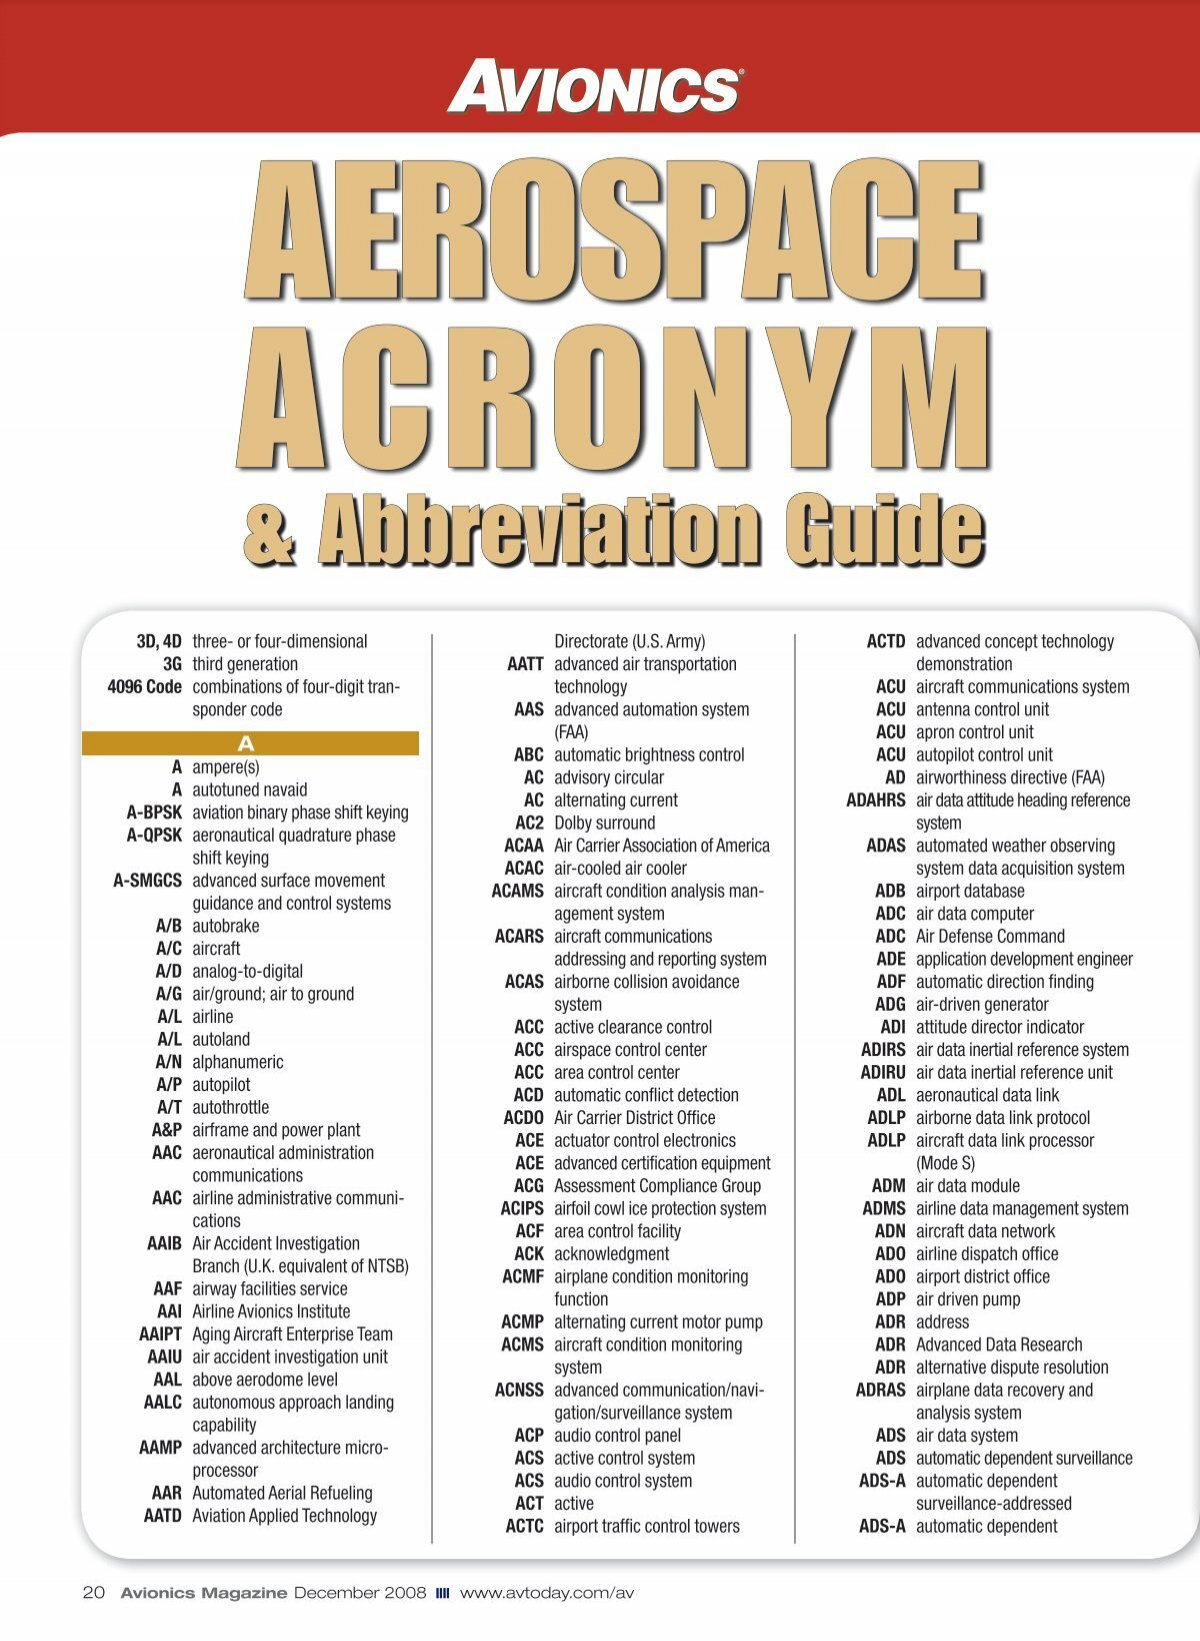 &amp; Abbreviation Guide - Aviation